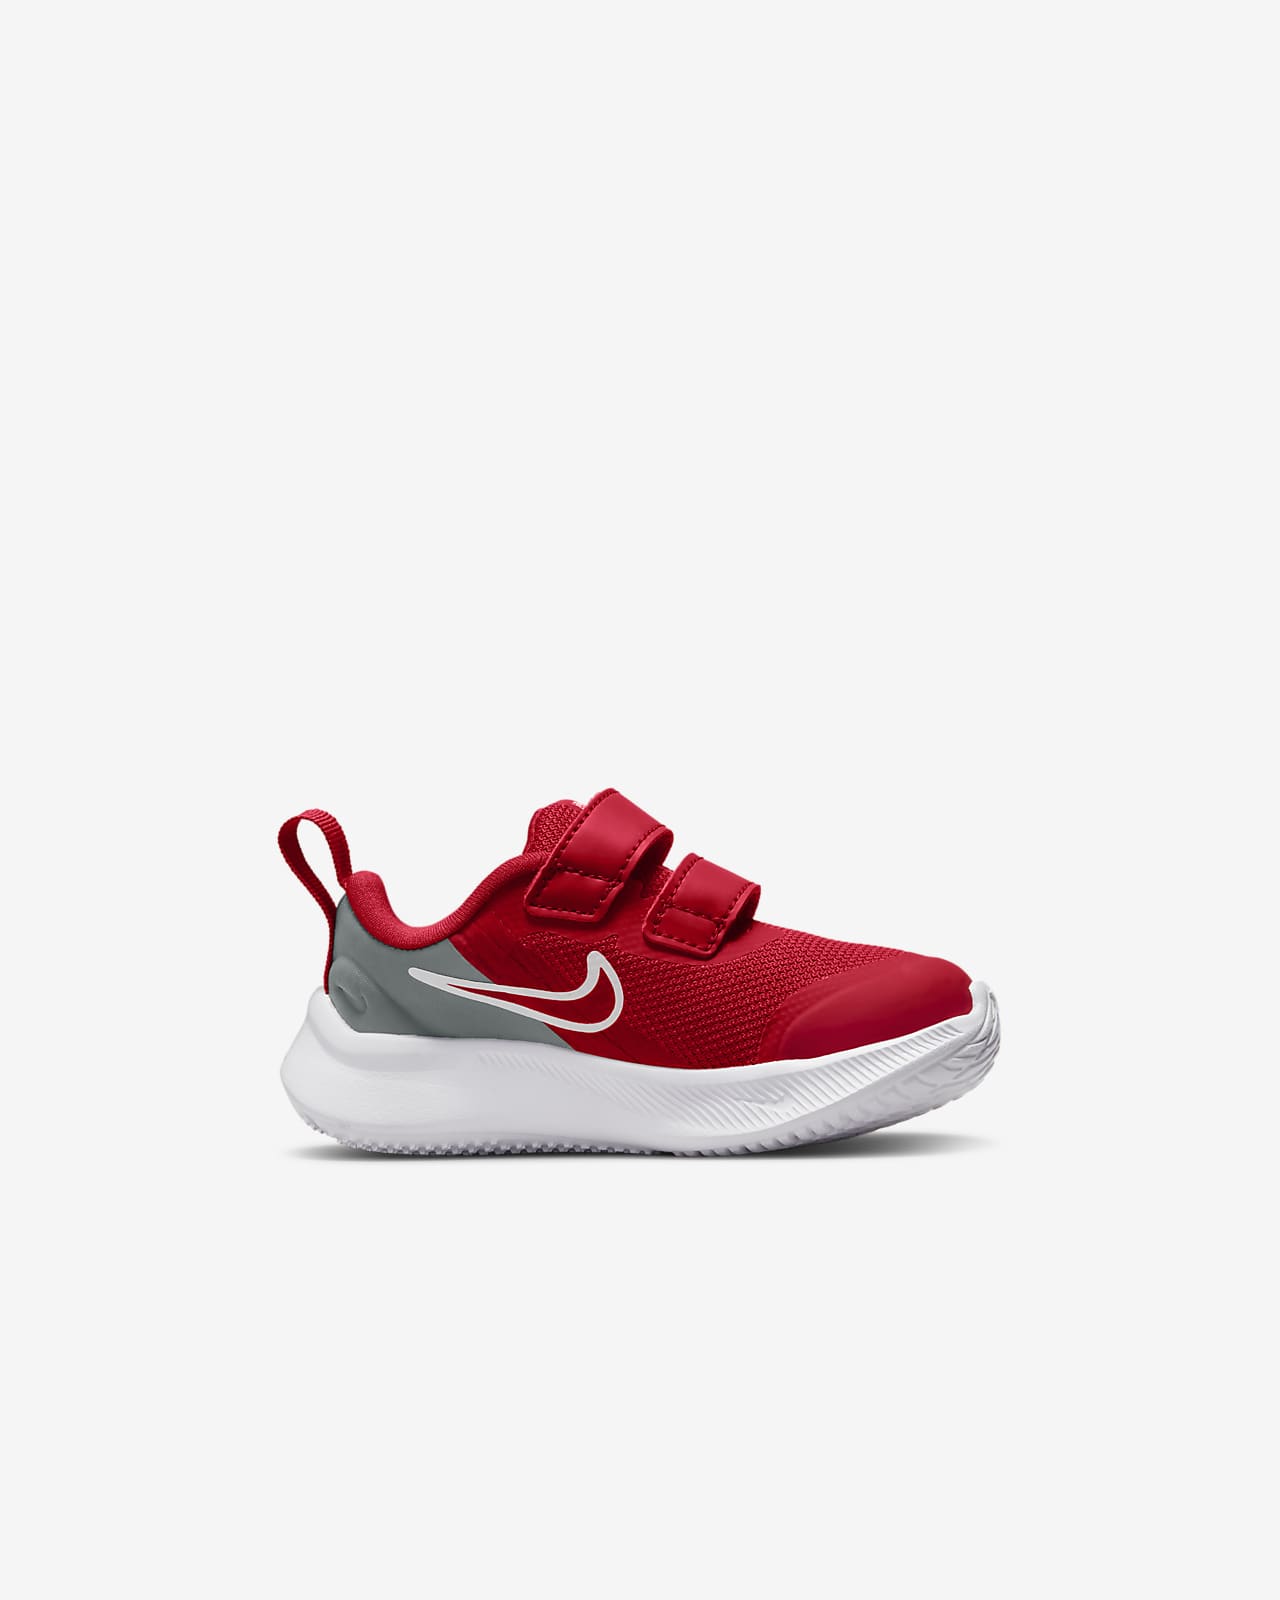 Nike Star Shoes. Runner 3 Baby/Toddler